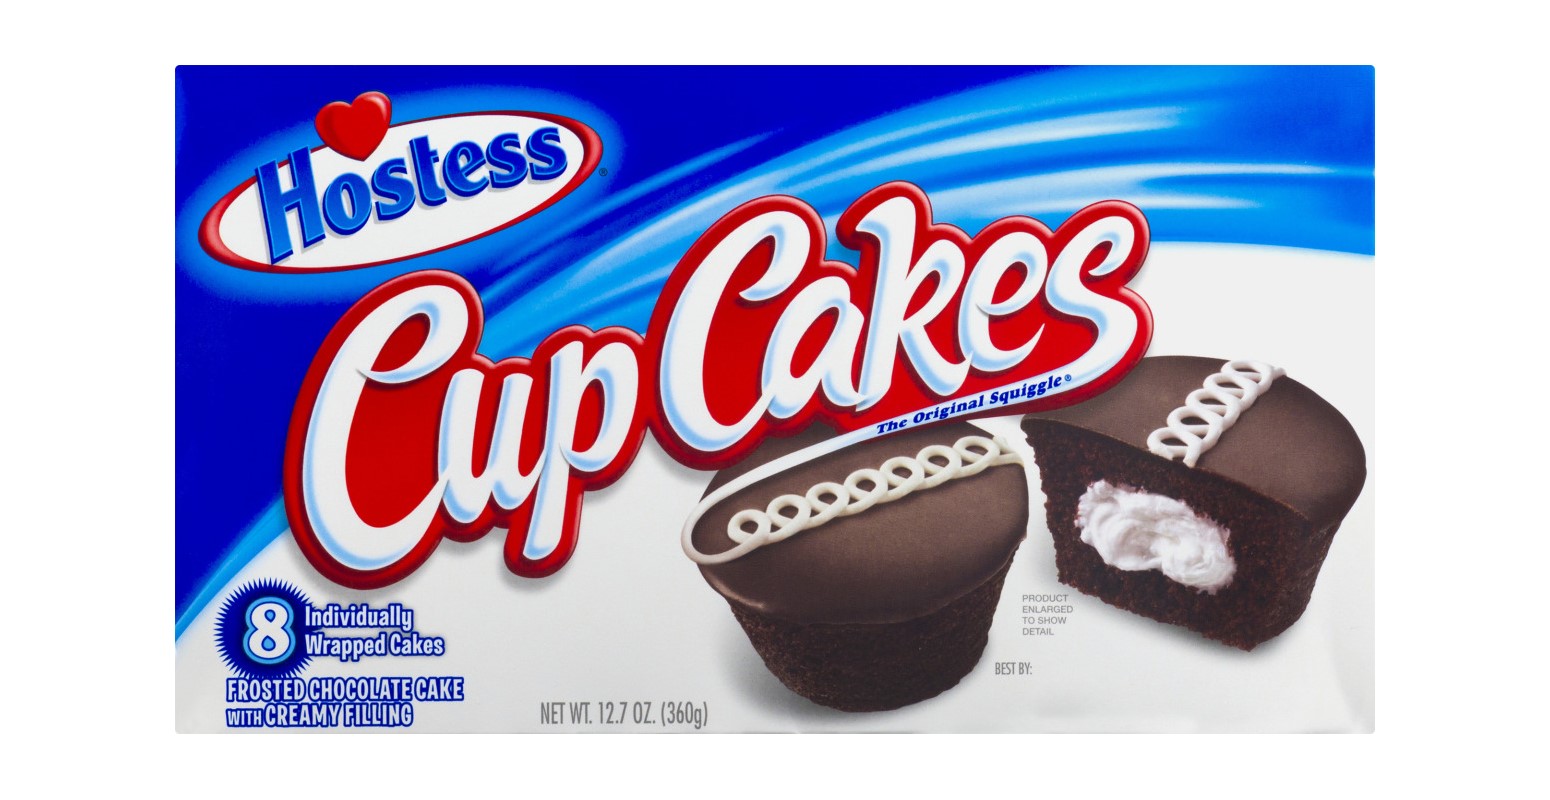 Hostess Cupcakes